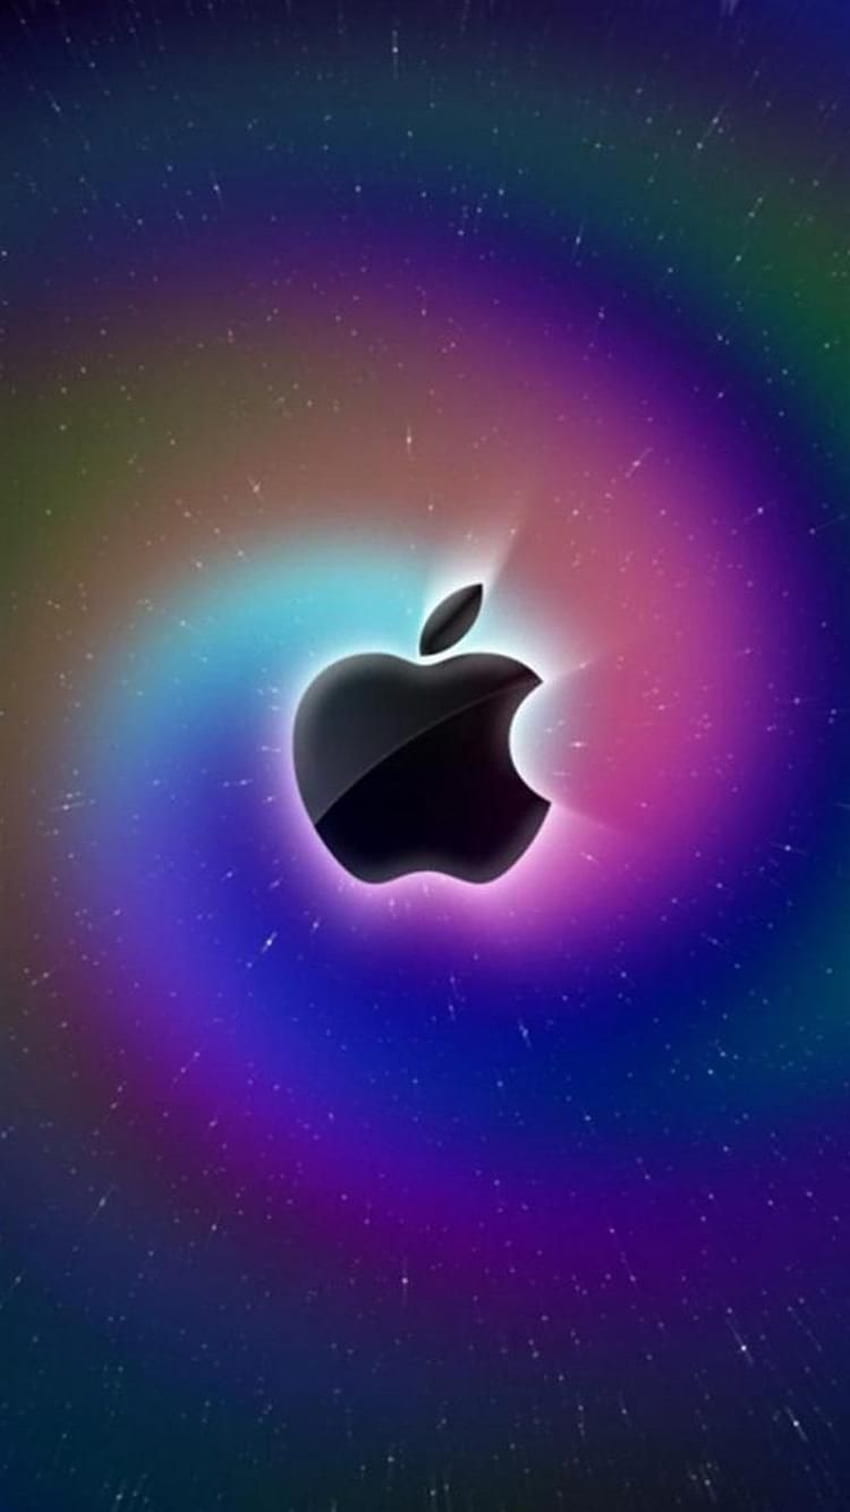 Apple 컬러풀 스타 아이폰 6 ko 2020 (avec ). Fond d'écran de pomme, Fond d'écran iphone apple, Fond ecran apple, Broken Apple 로고 HD 전화 배경 화면